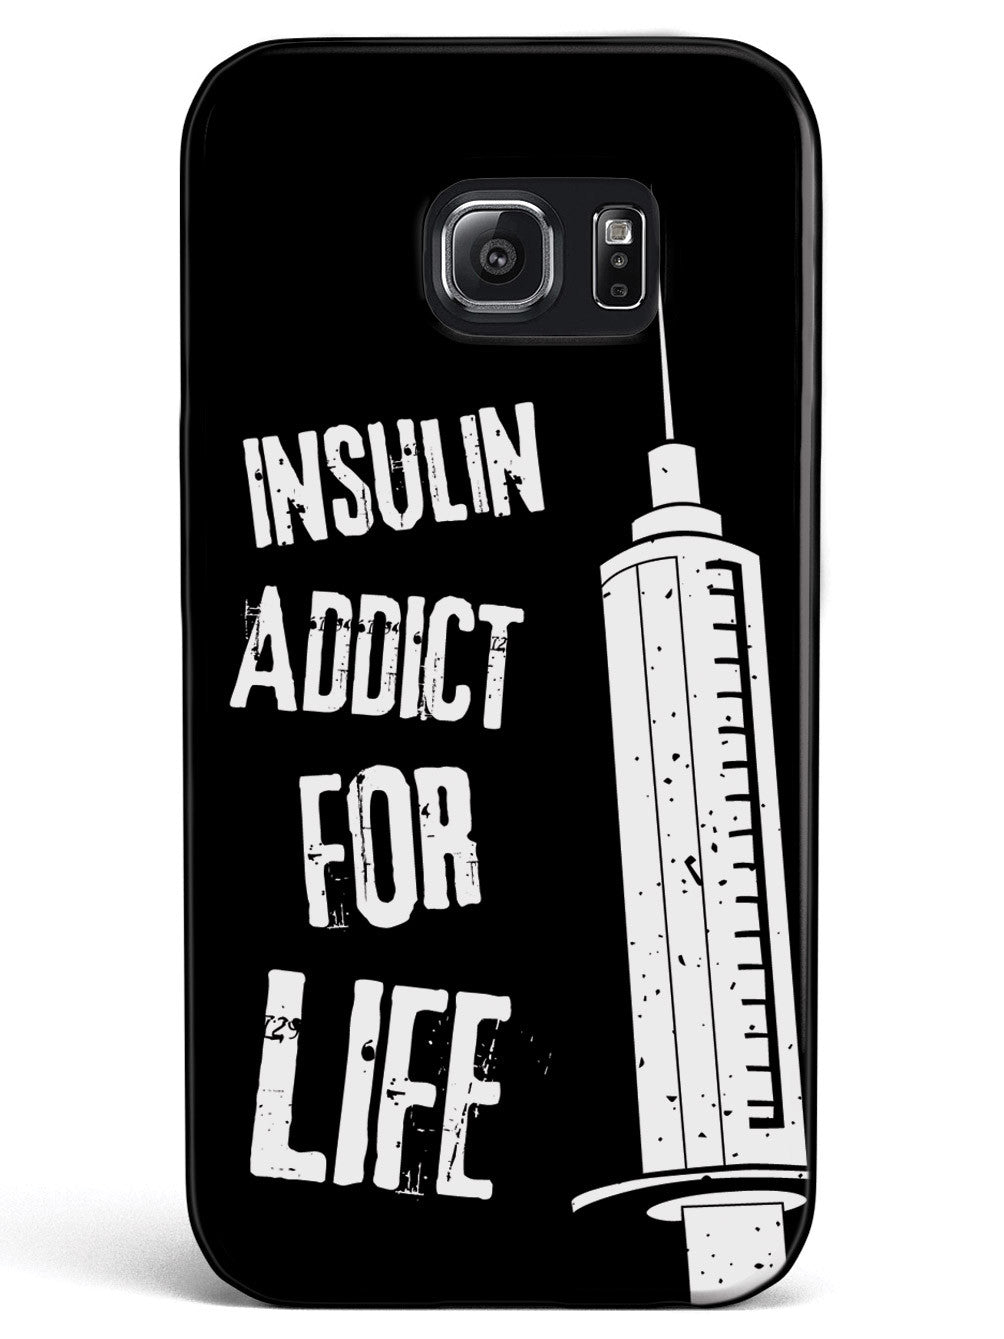 Insulin Addict for Life Case Diabetes Awareness